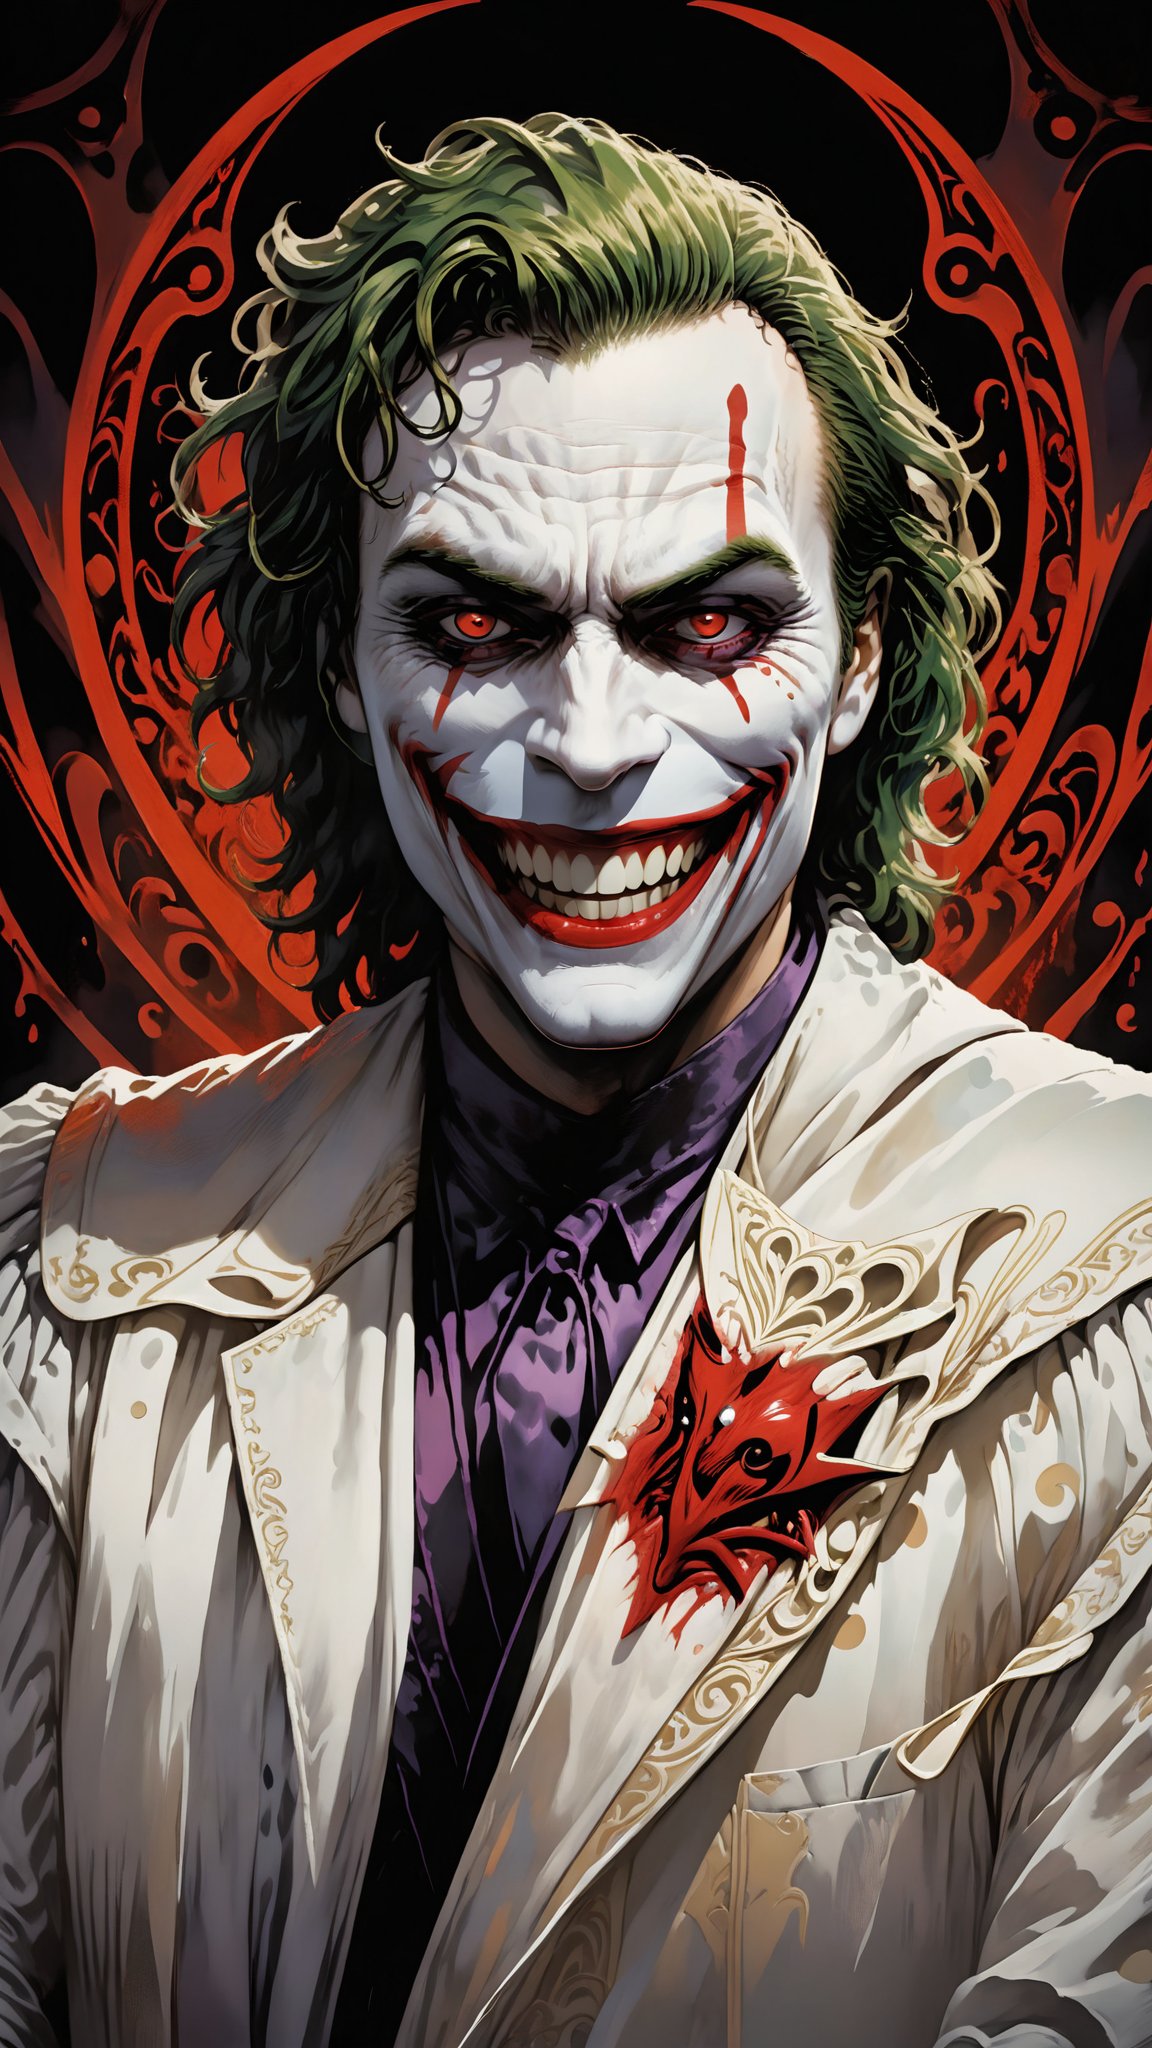 a medium shot of The Joker, white robe, artistic, intricate detail, red eyes, big smile, dark aura, dark background